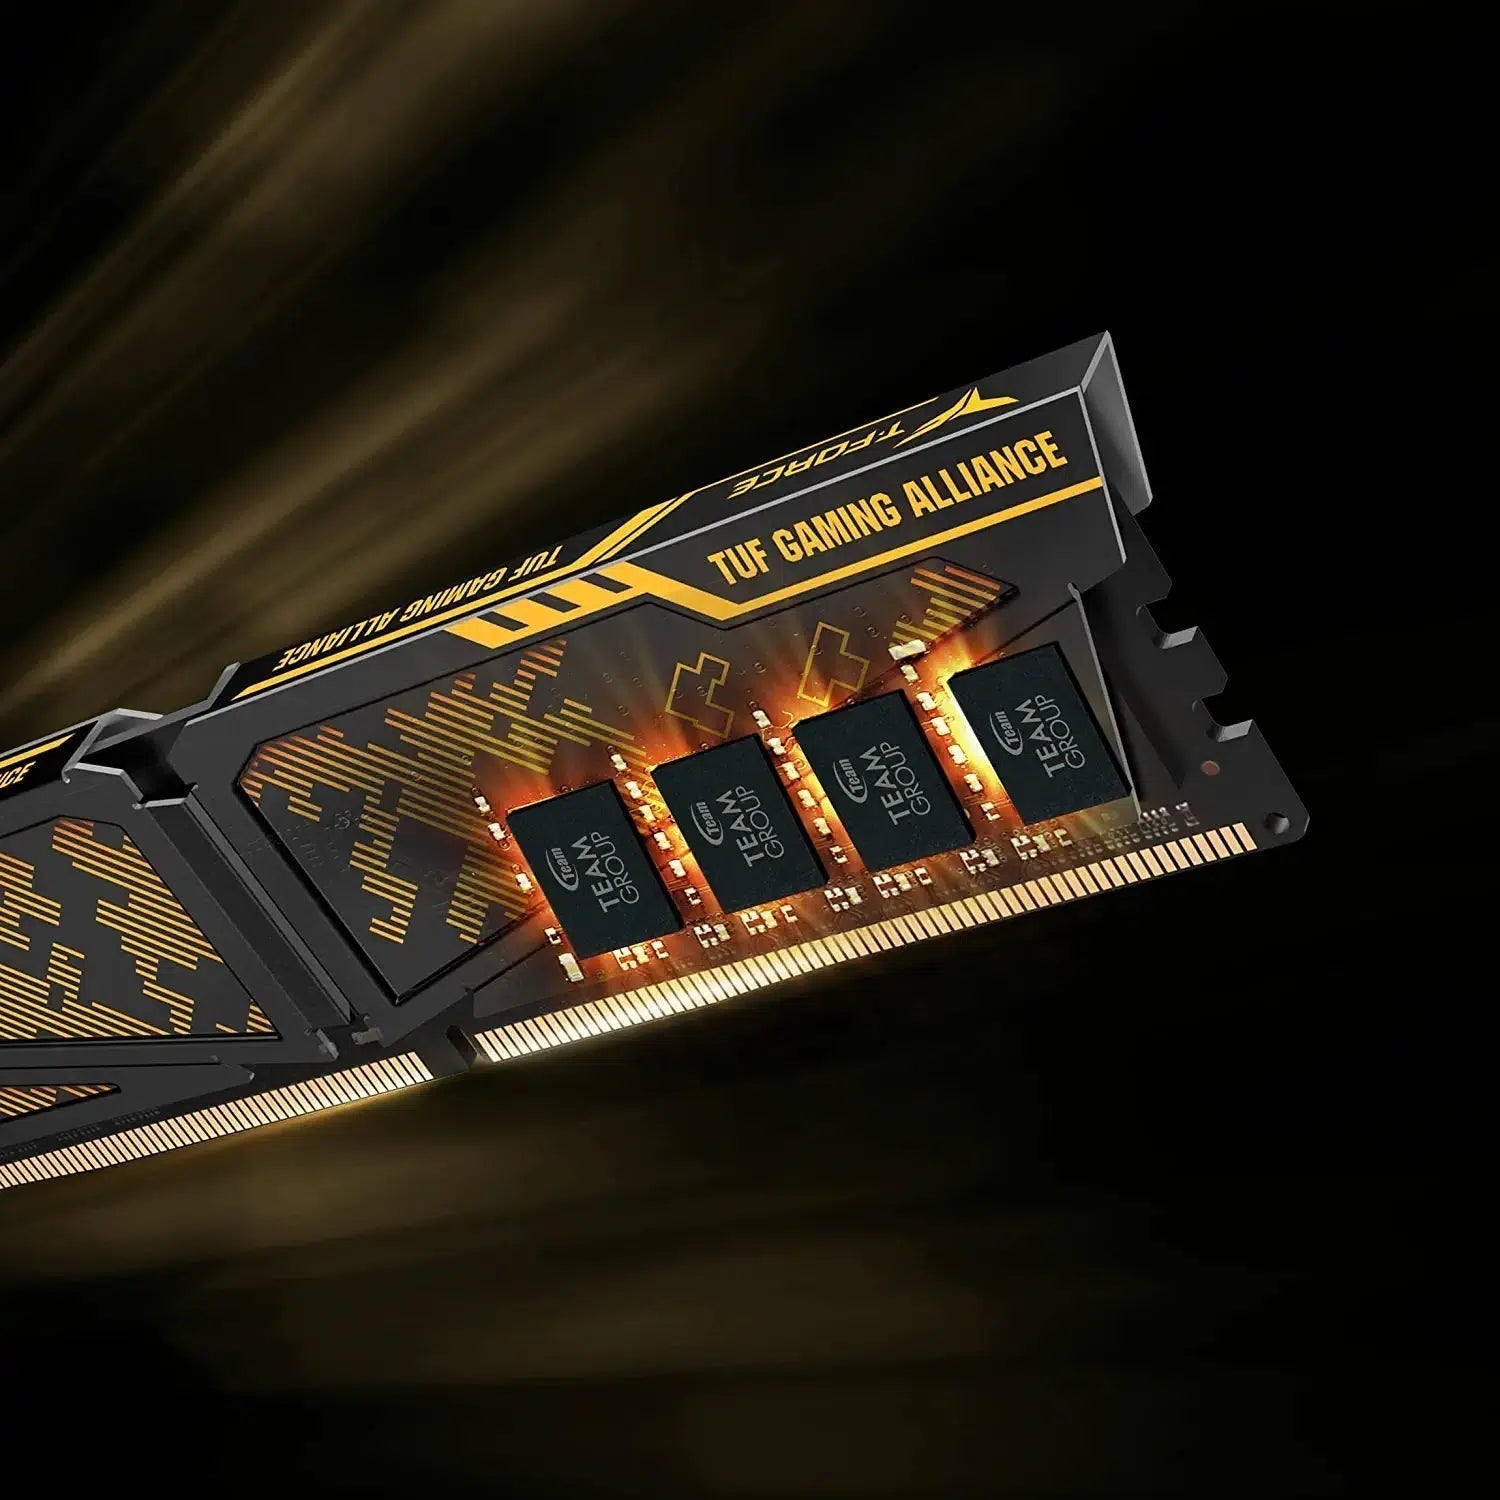 TEAMGROUP T-FORCE VULCAN TUF VTUF8GBX23200 GAMING ALLIANCE DDR4 GAMING MEMORY-MEMORY-Makotek Computers